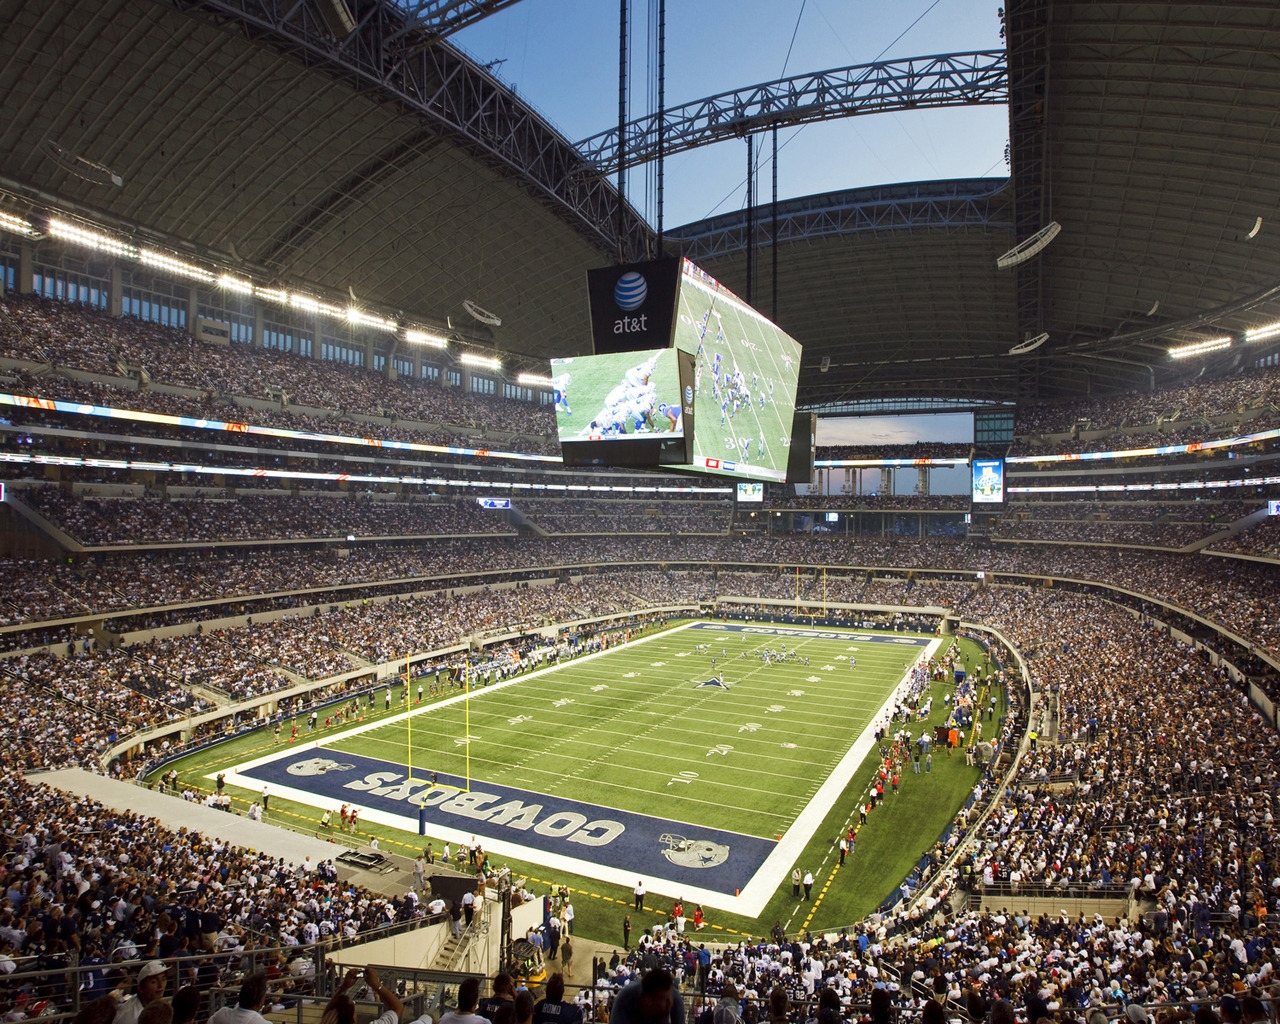 Cowboys Stadium for 1280 x 1024 resolution